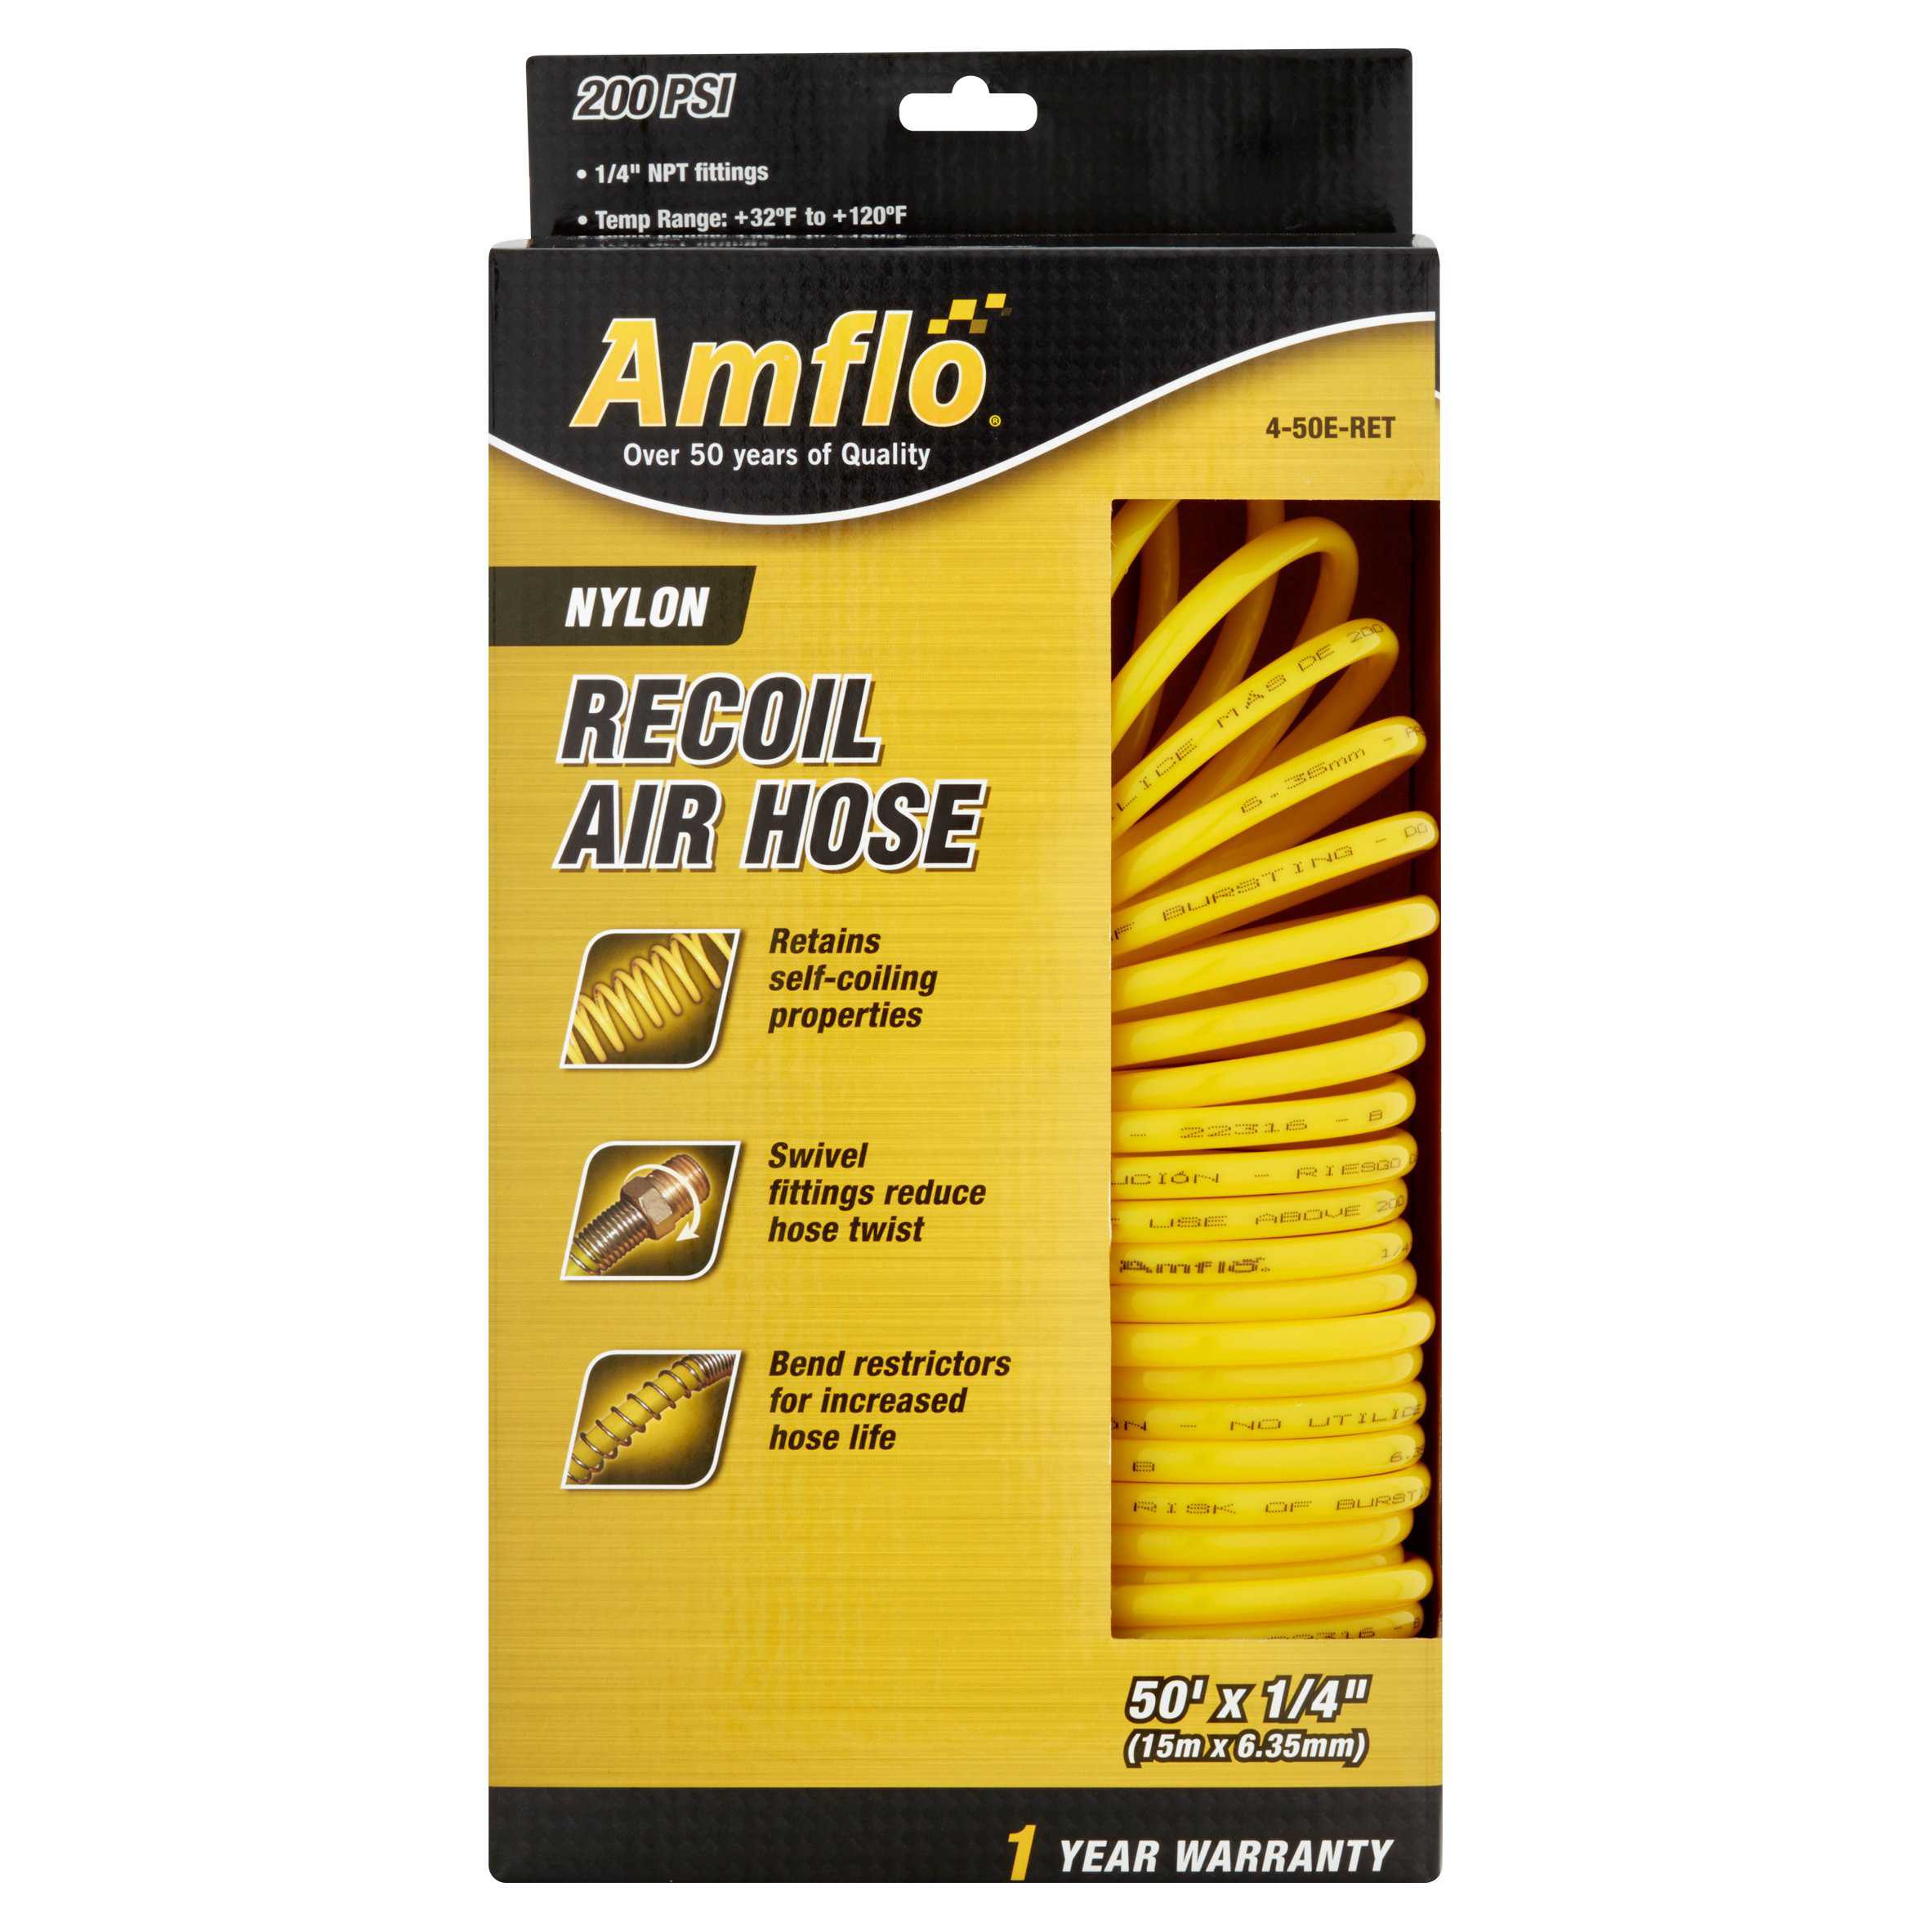 Amflo Nylon Recoil Air Hose